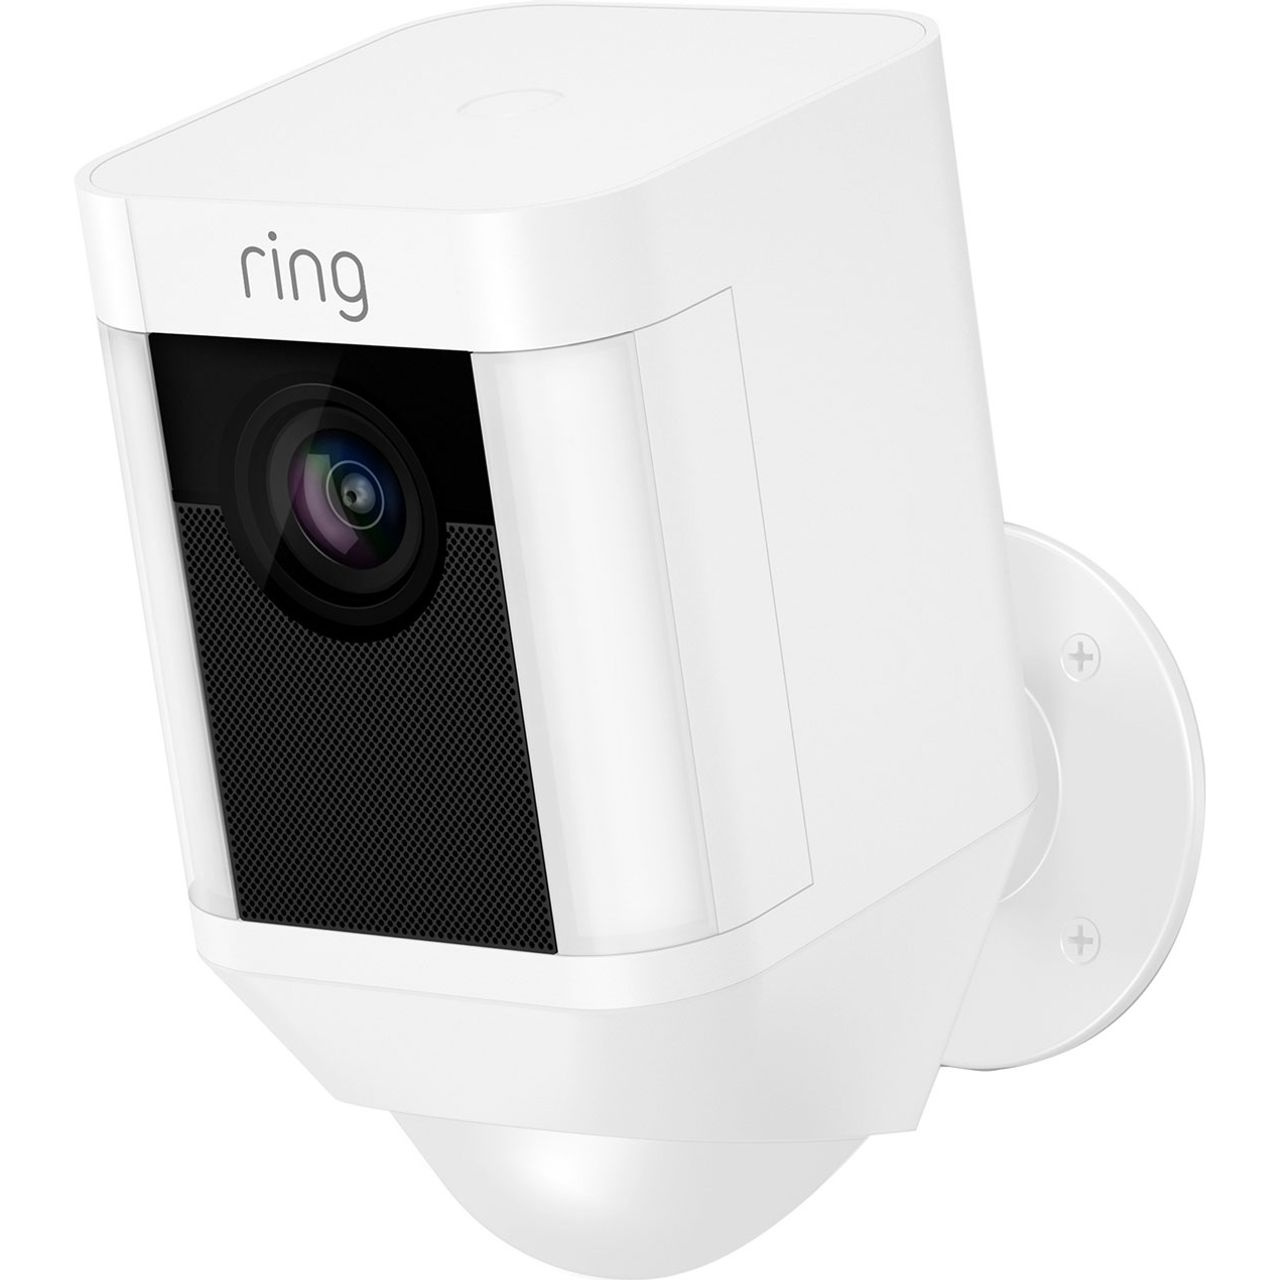 Ring Spotlight Cam Battery Full HD 1080p Review